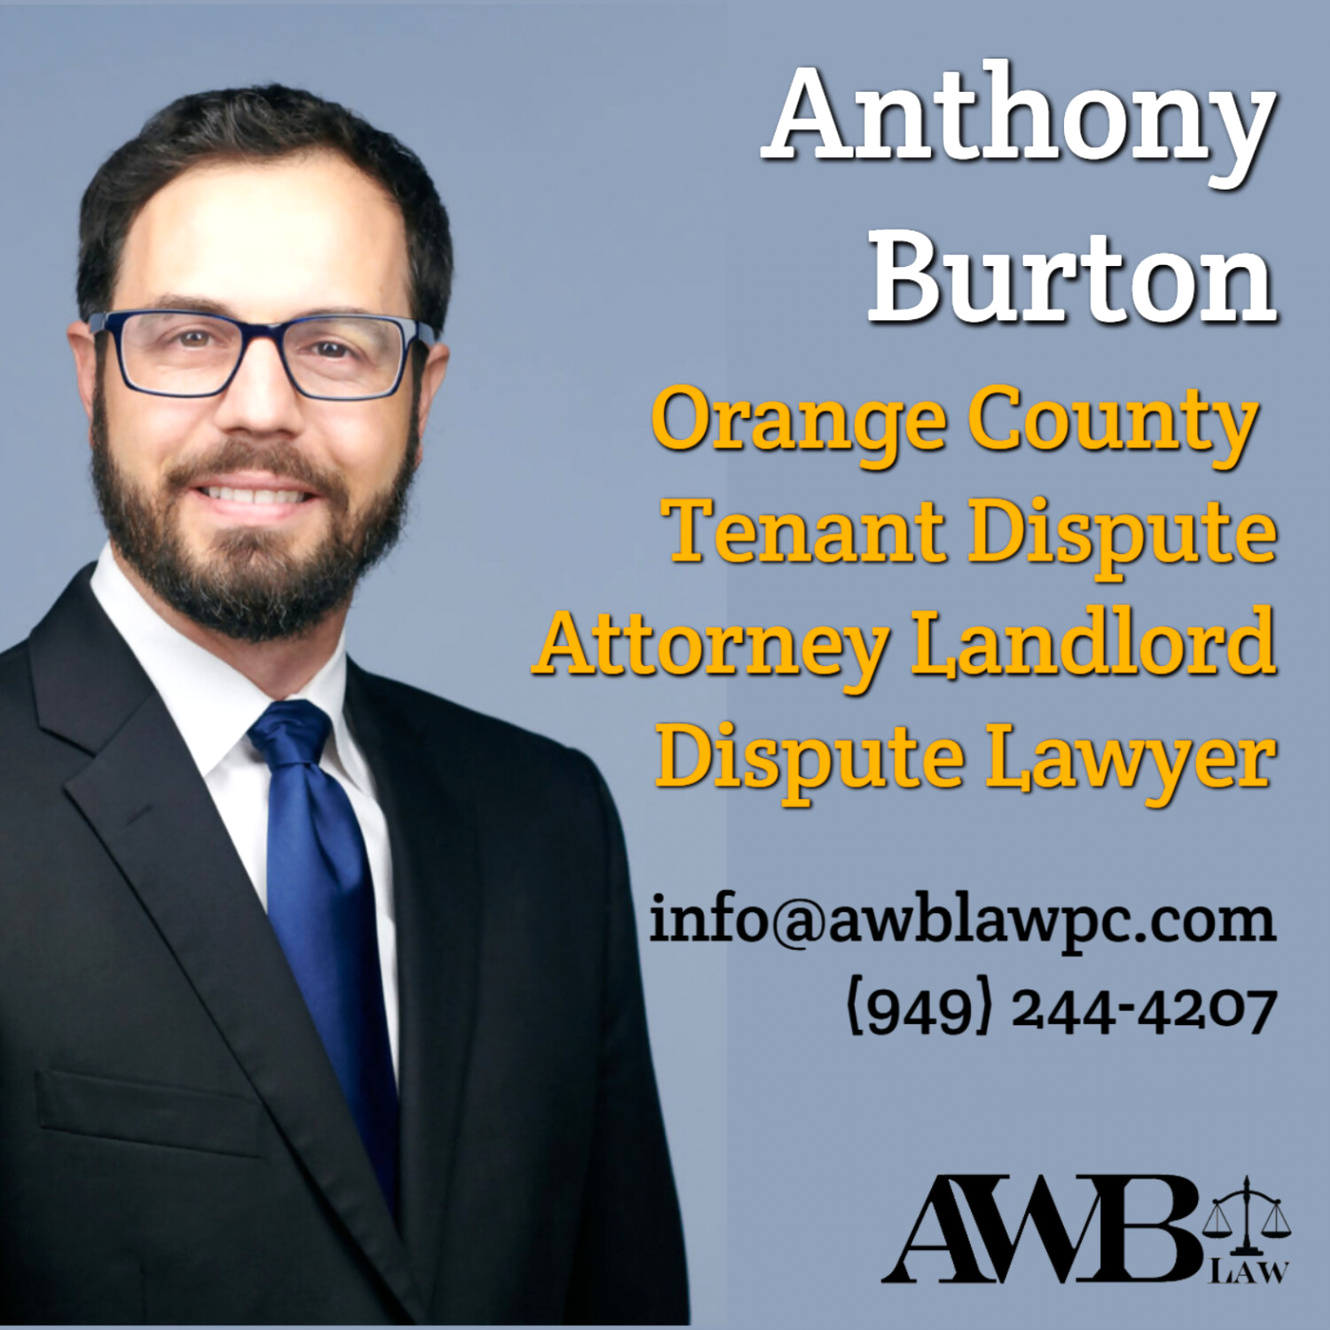 anthony burton irvine anaheim orange county ca tenant dispute attorney landlord dispute lawyer